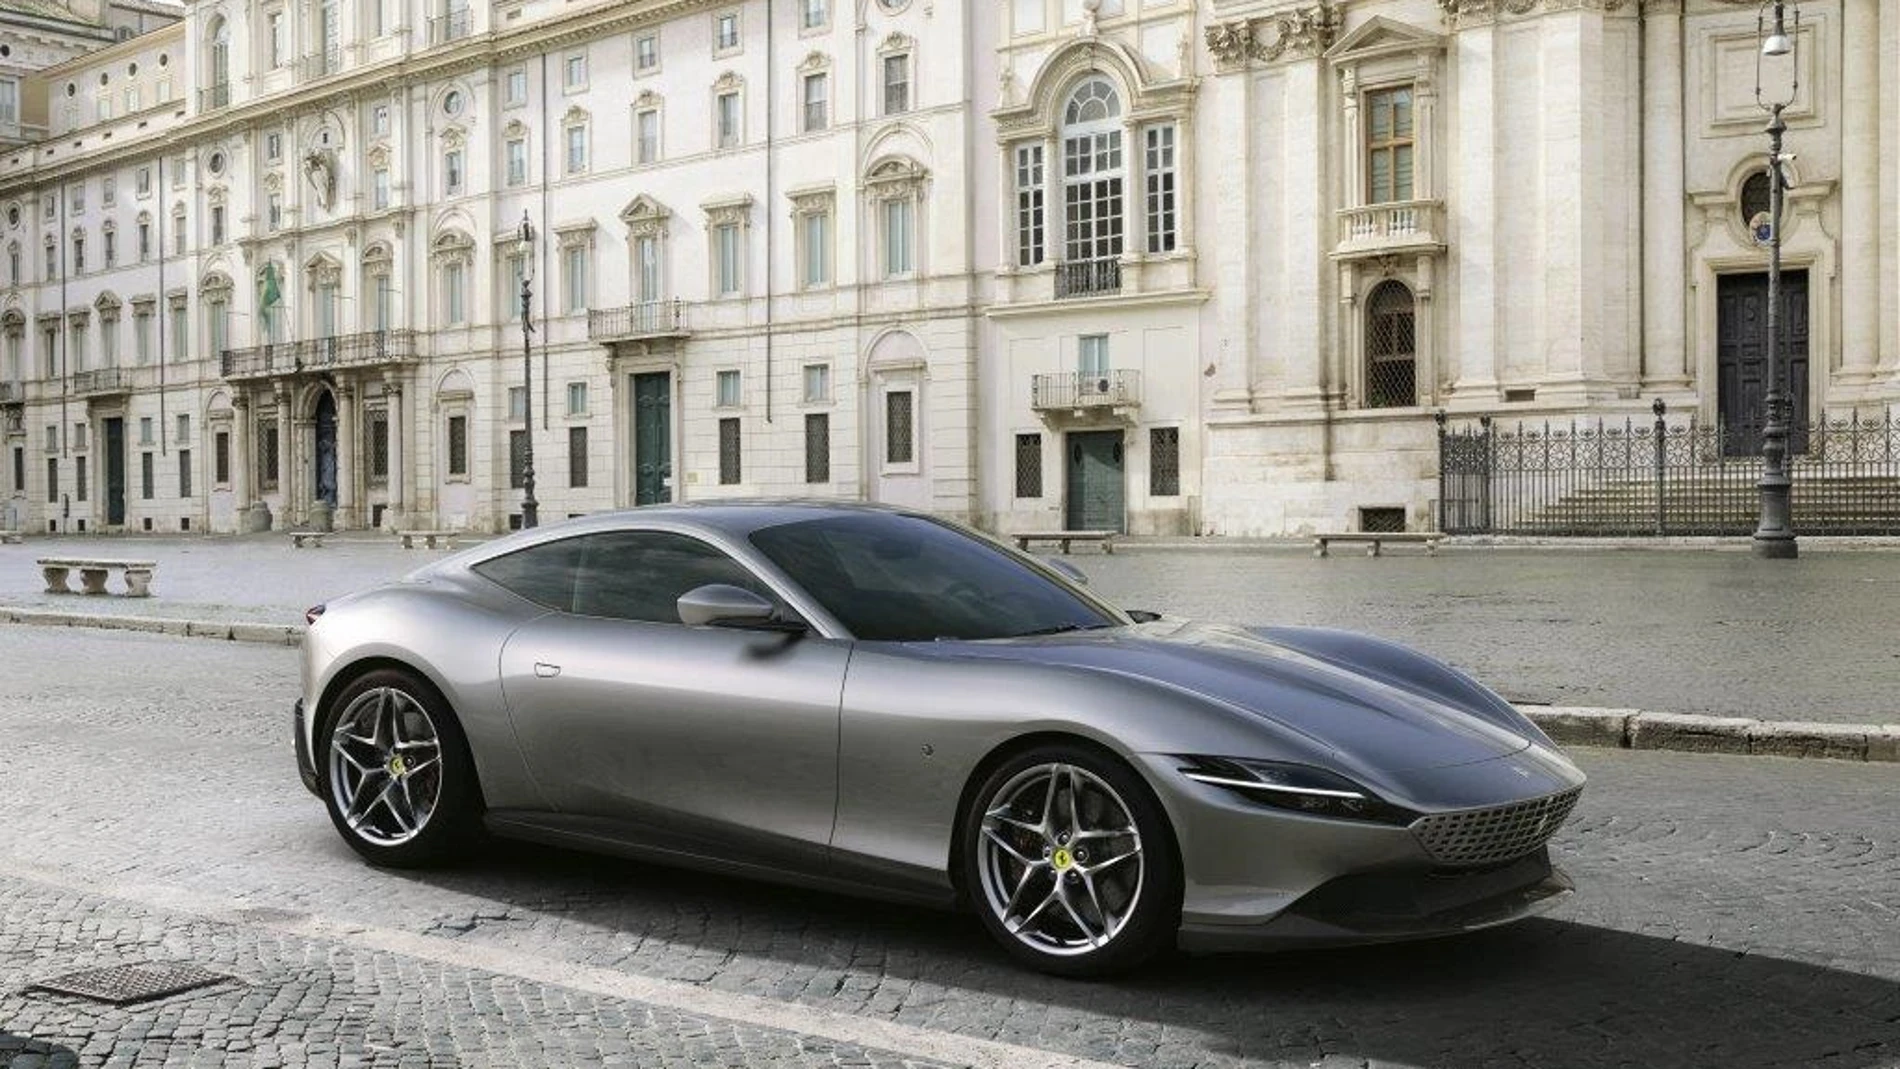 Economía/Motor.- Ferrari desvela su nuevo modelo Roma, con 620 caballos